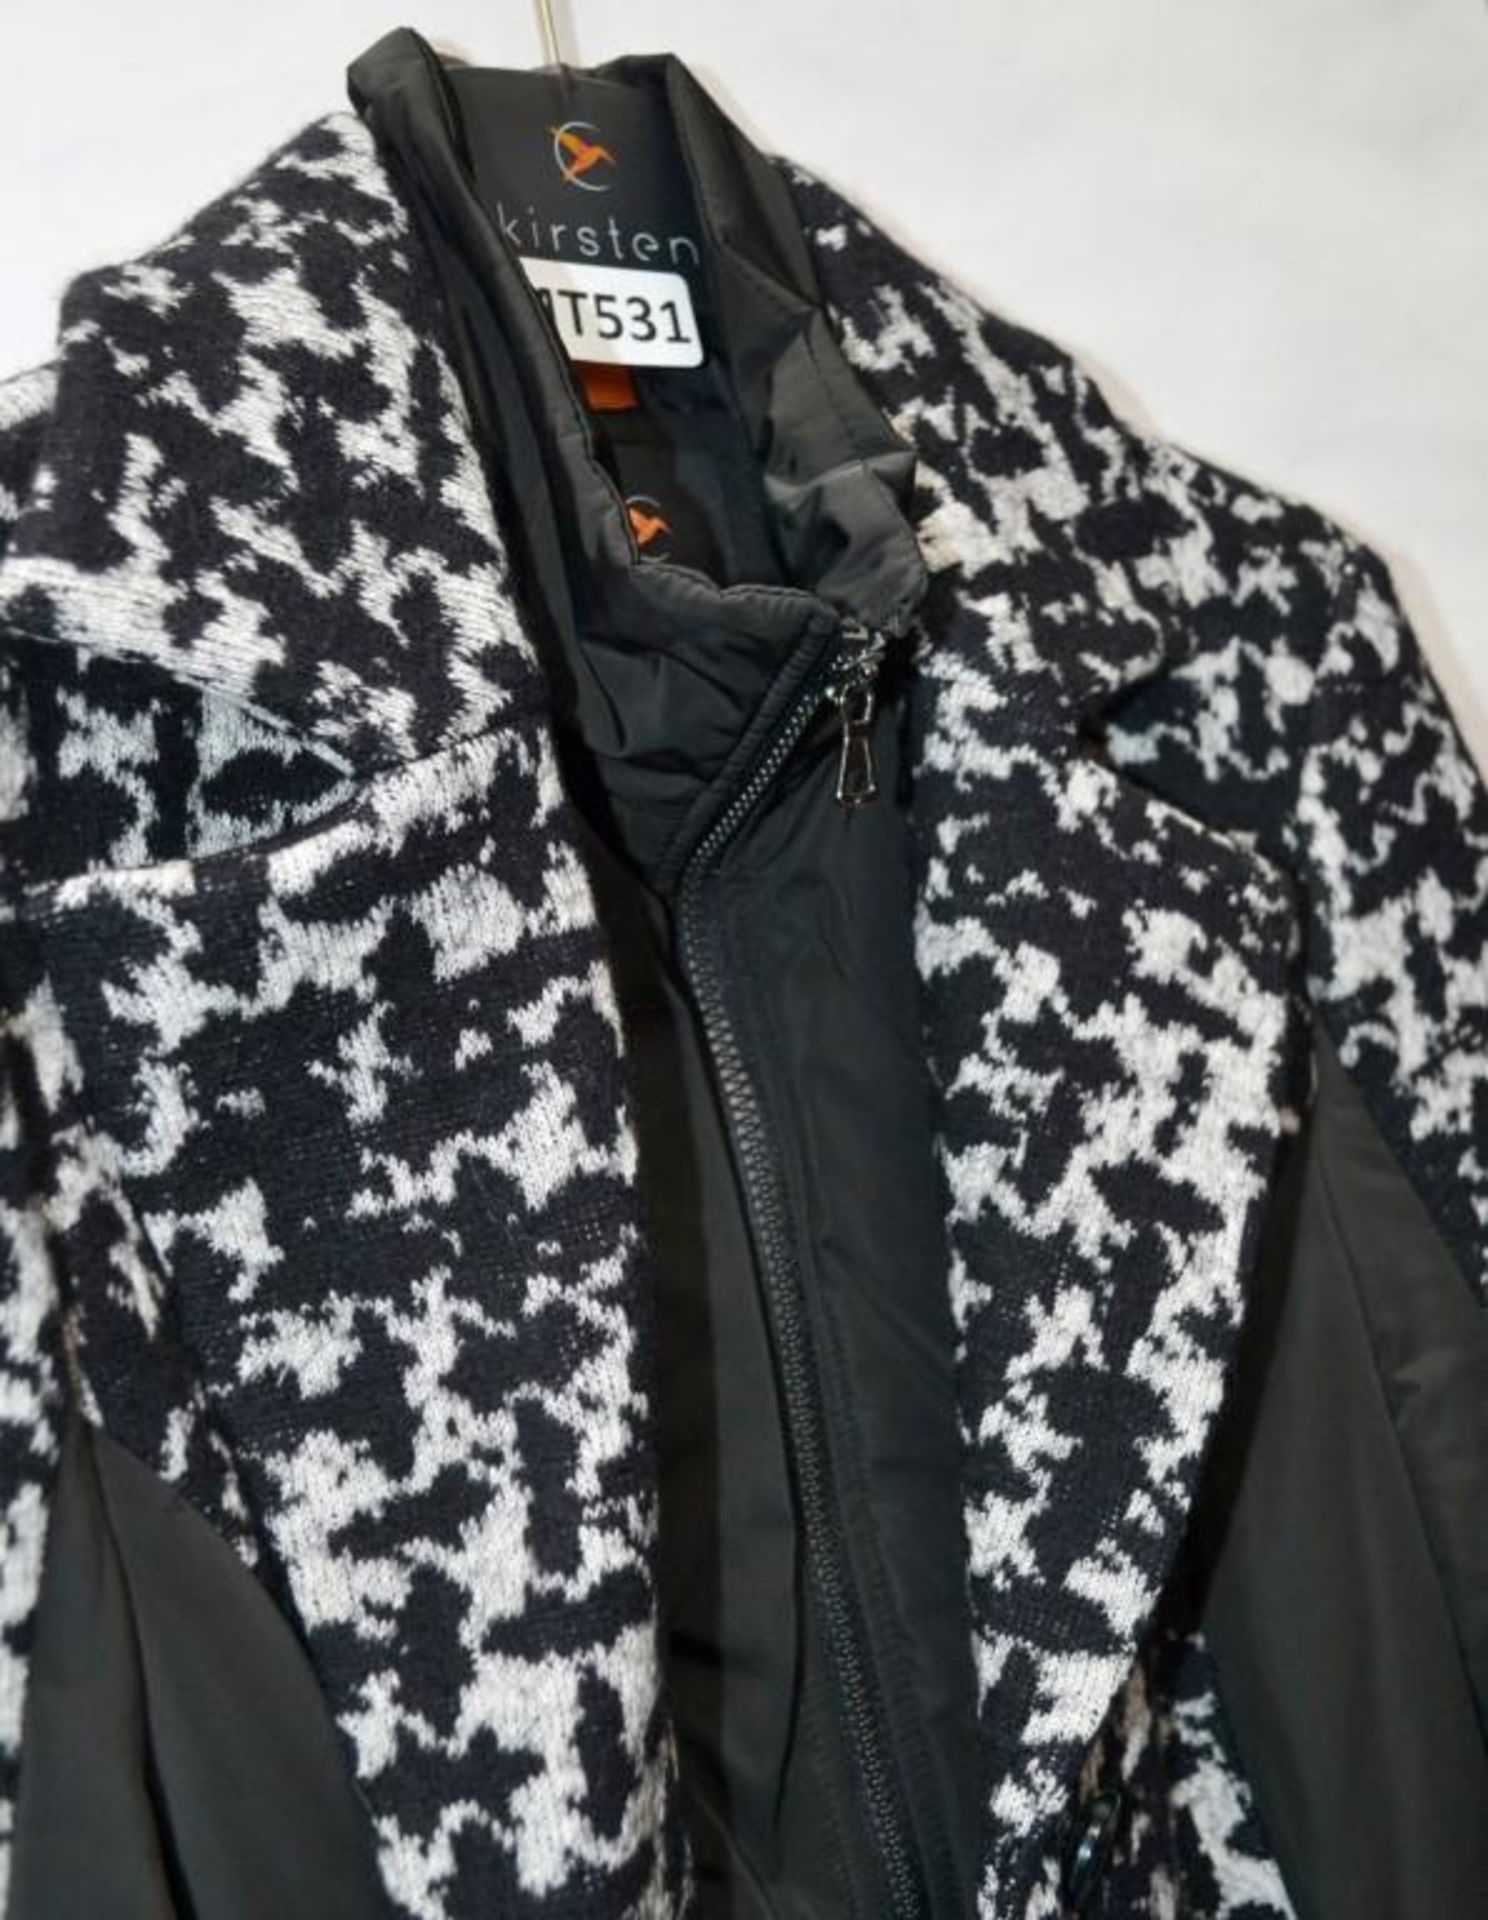 1 x Steilmann KSTN By Kirsten Womens Winter Coat - Wool/Cotton Blend Coat Featuring An Oversized Hou - Image 6 of 6